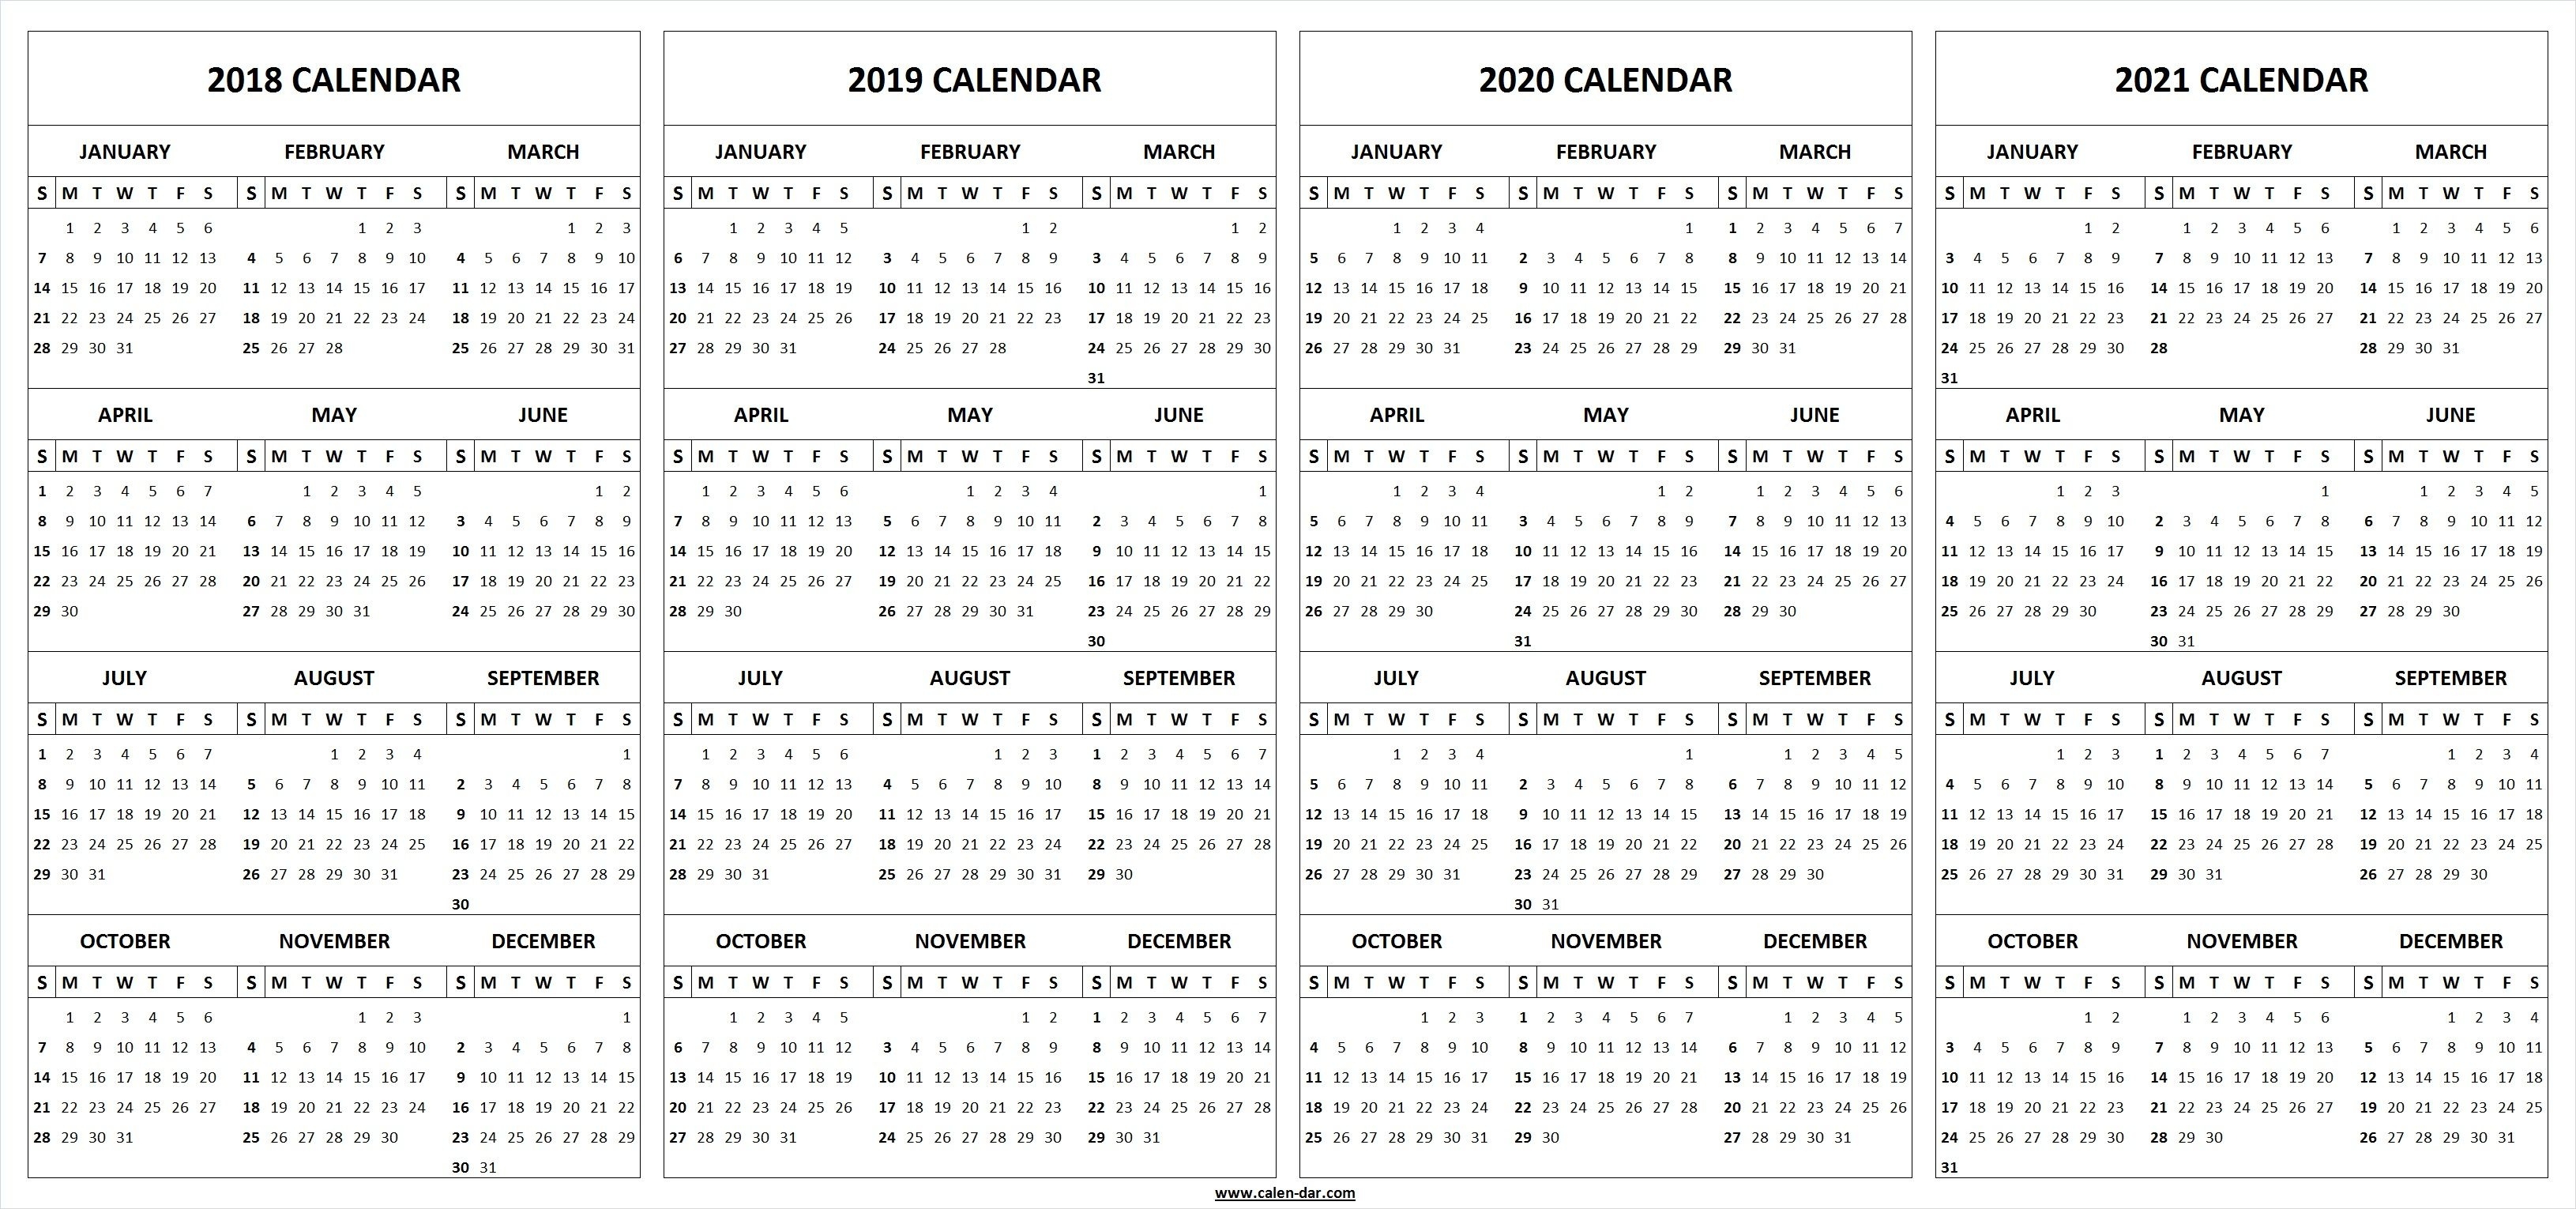 4 Four Year 2018 2019 2020 2021 Calendar Printable Template 2019 Calendar 2020 Printable